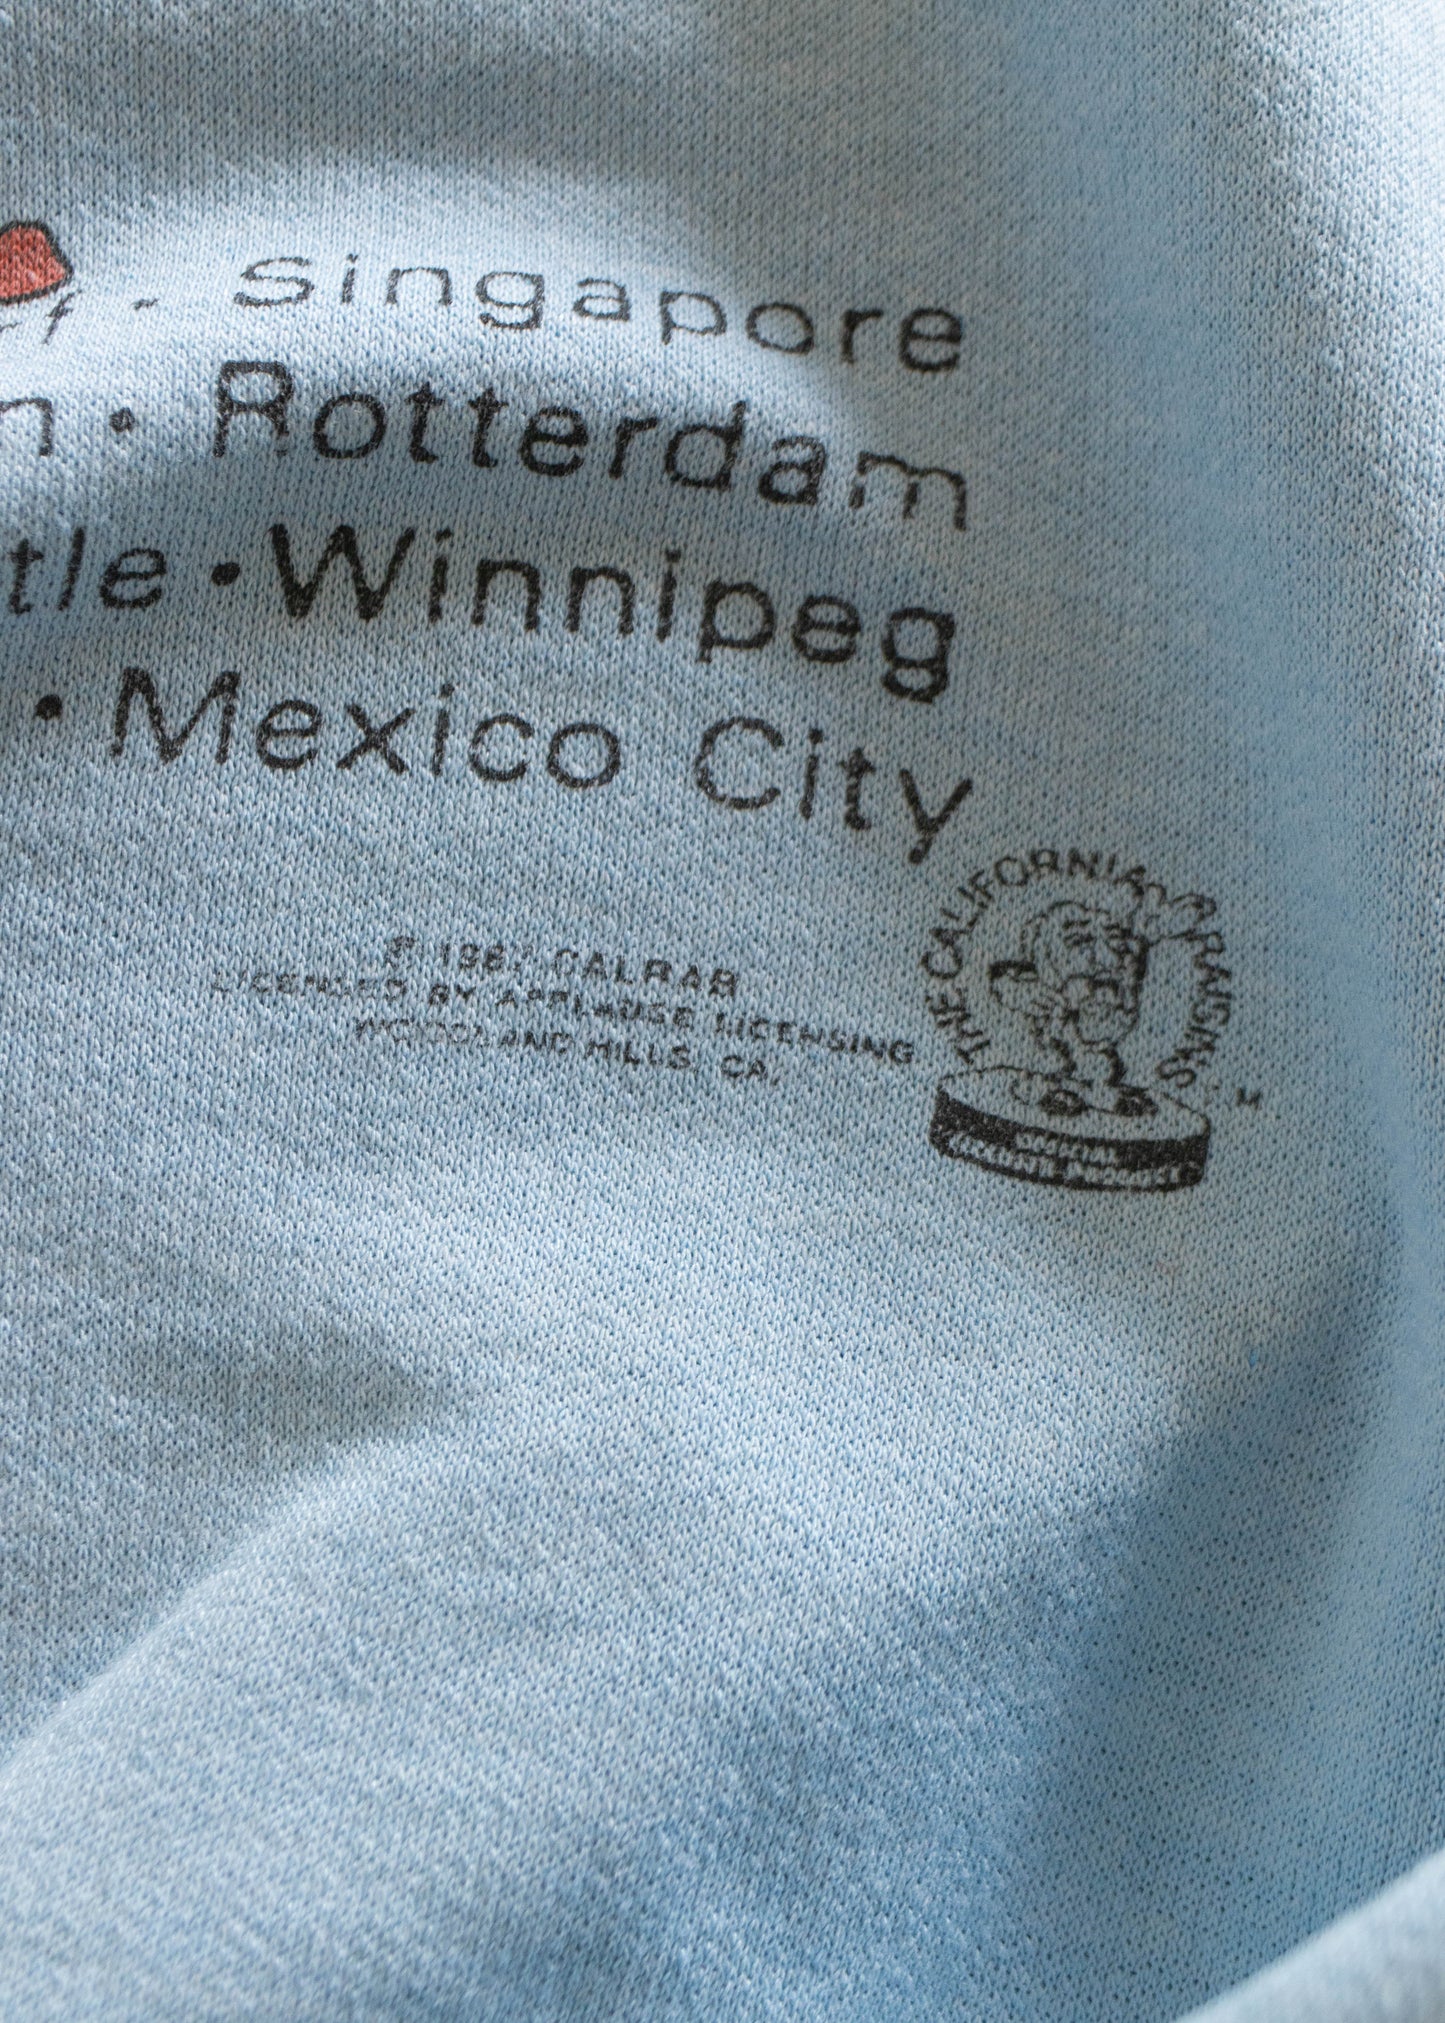 1987 California Raisins Sweatshirt Size L/XL